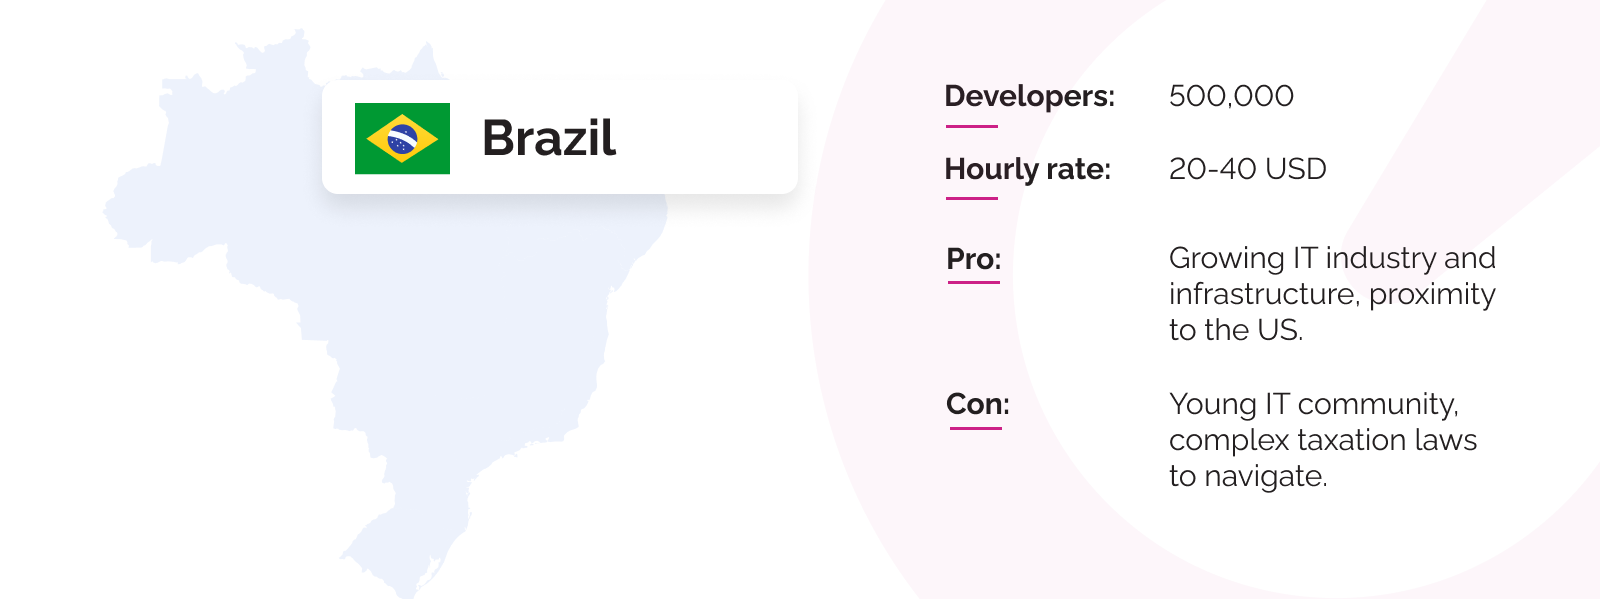 Software development outsourcing statistics for Brazil.